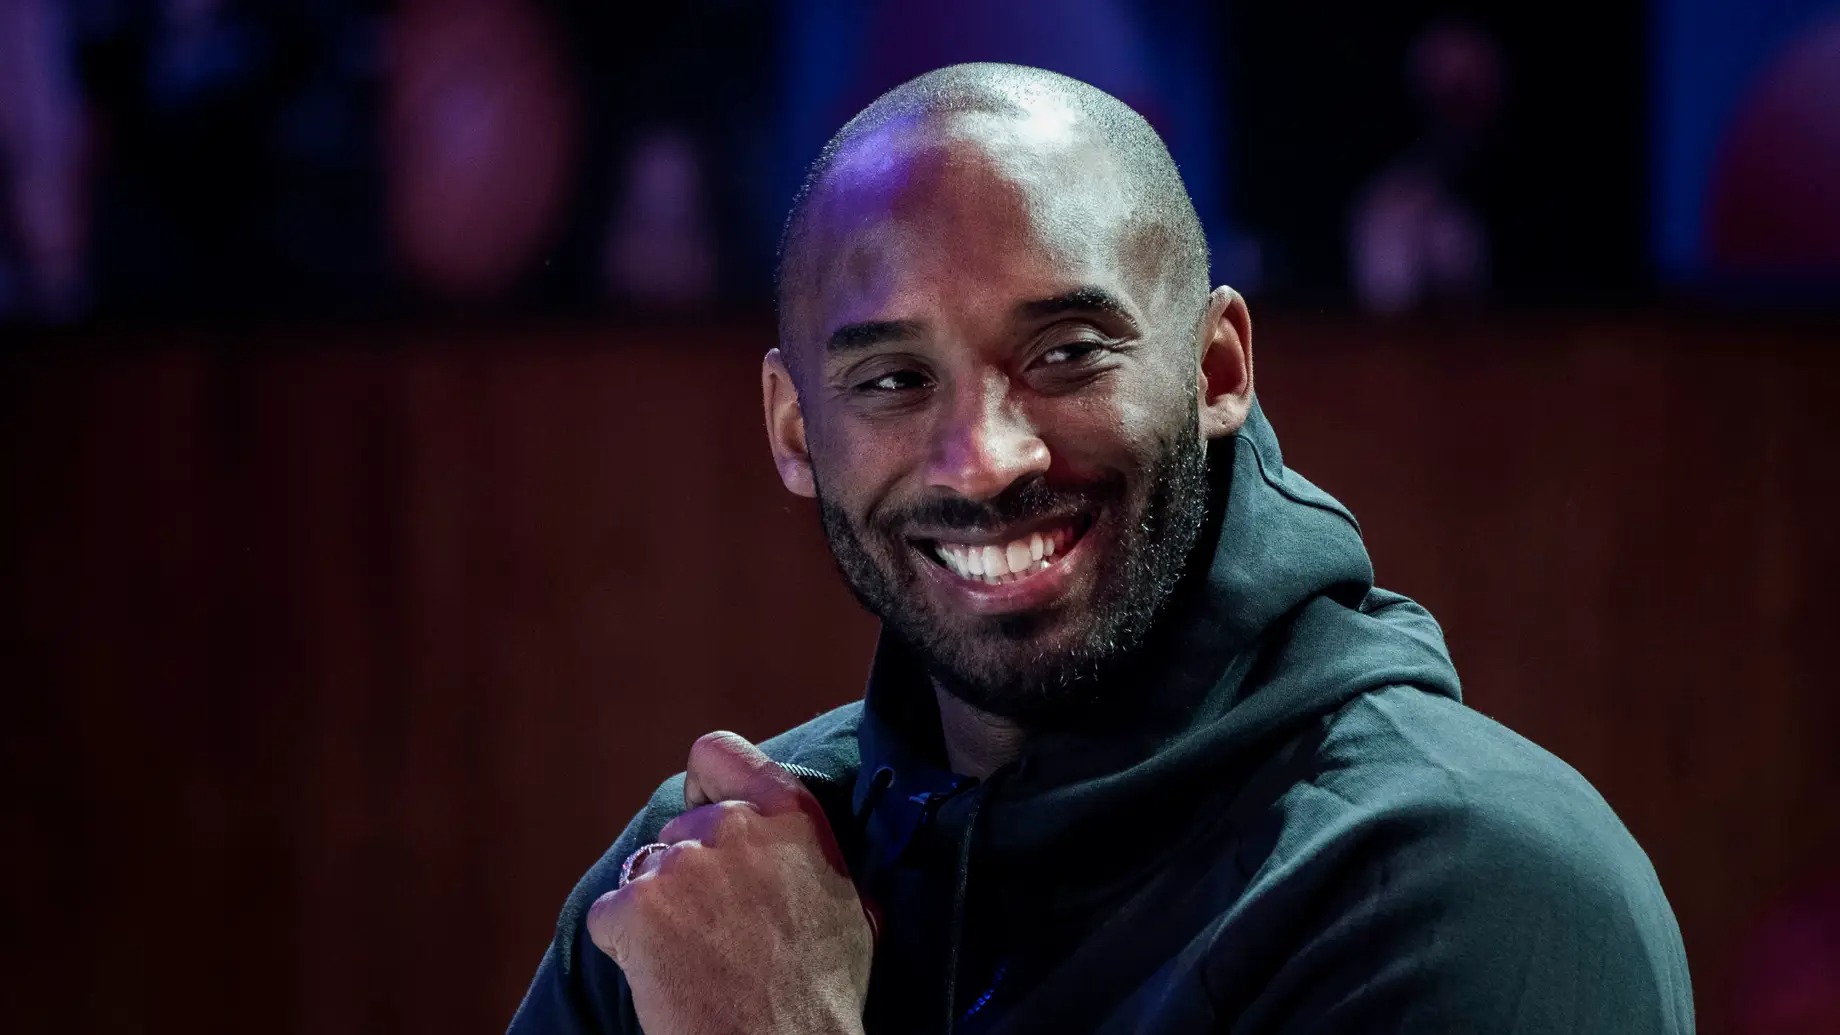 Nike Says It's Relaunching Kobe Bryant's Line This Summer